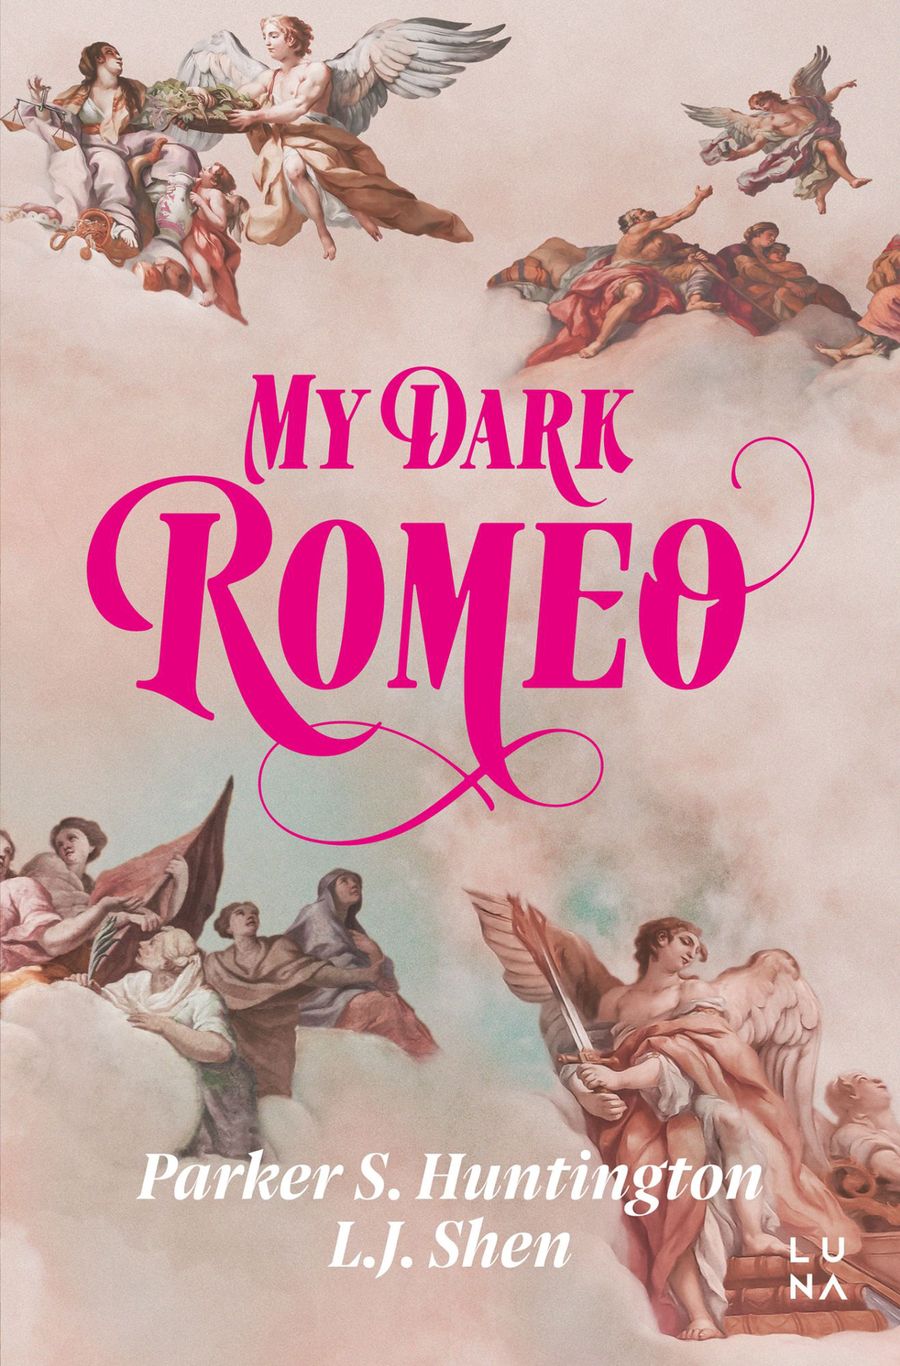 Okładka książki "My Dark Romeo"